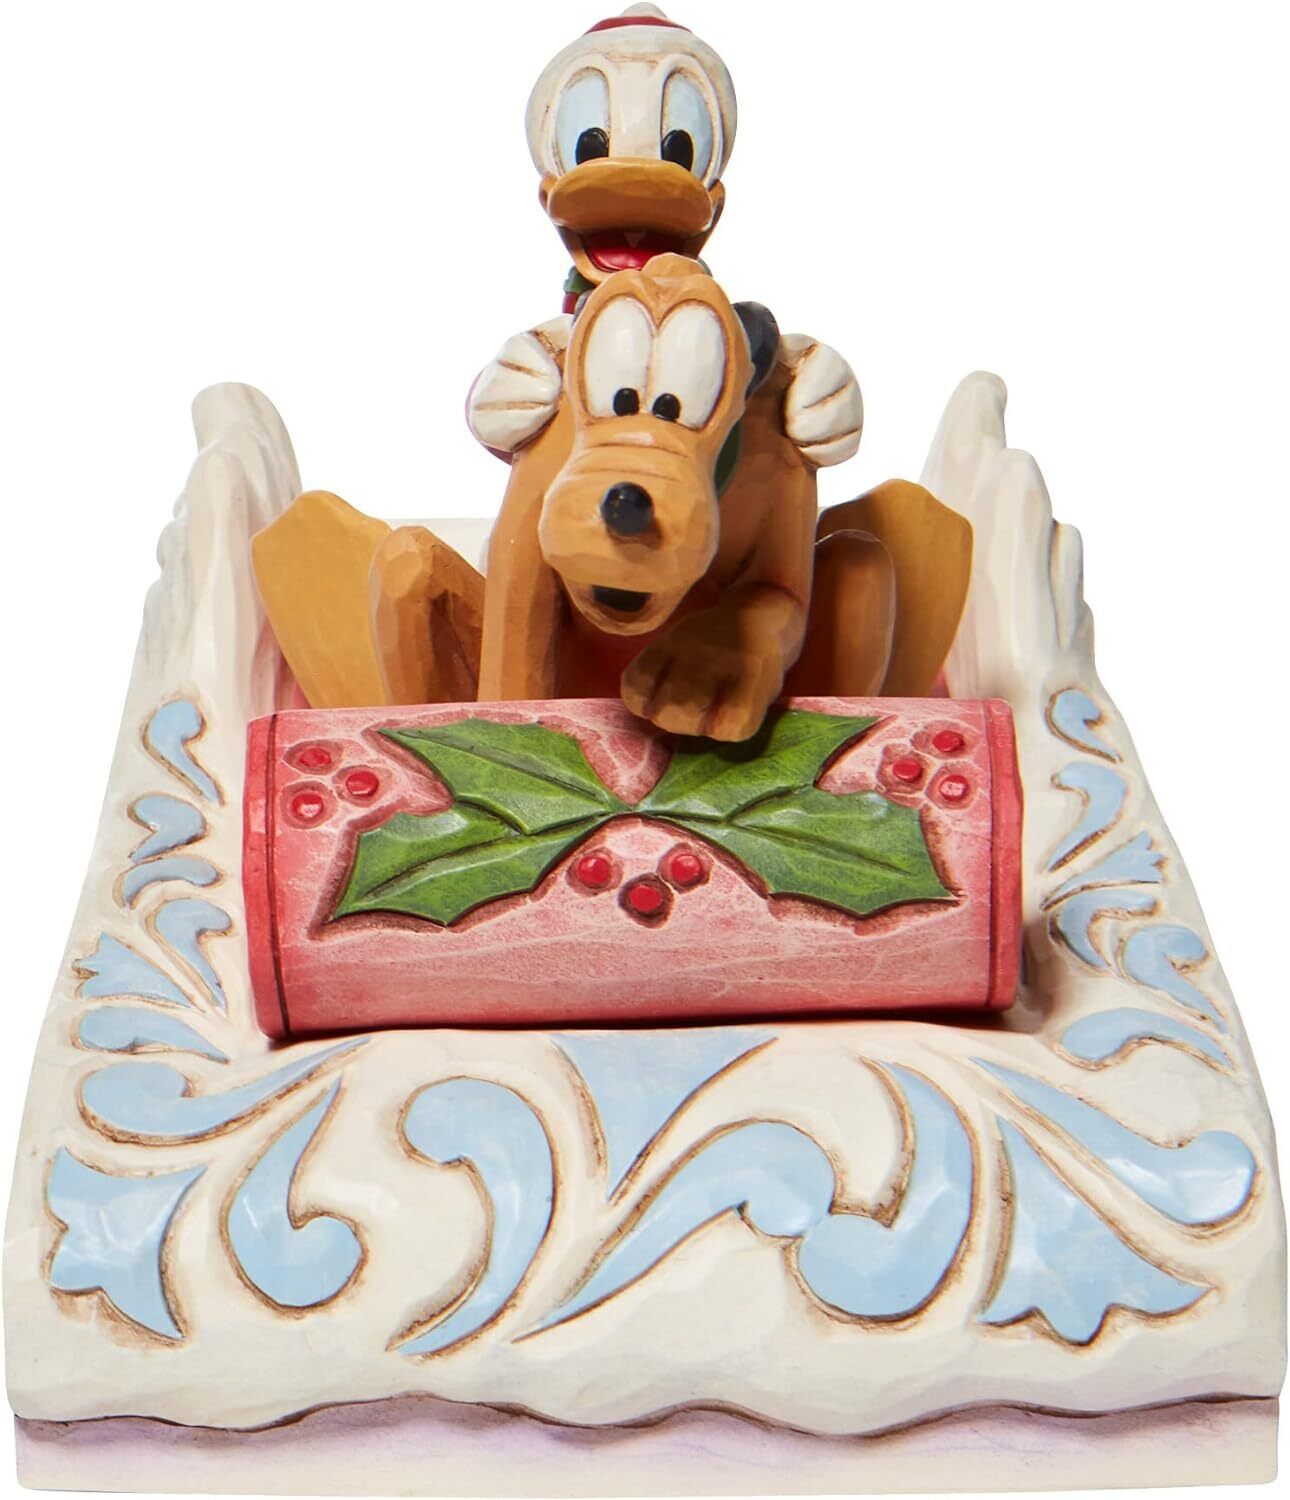 Enesco Disney Traditions Donald and Pluto Sledding Figurine 6008973 New in Box